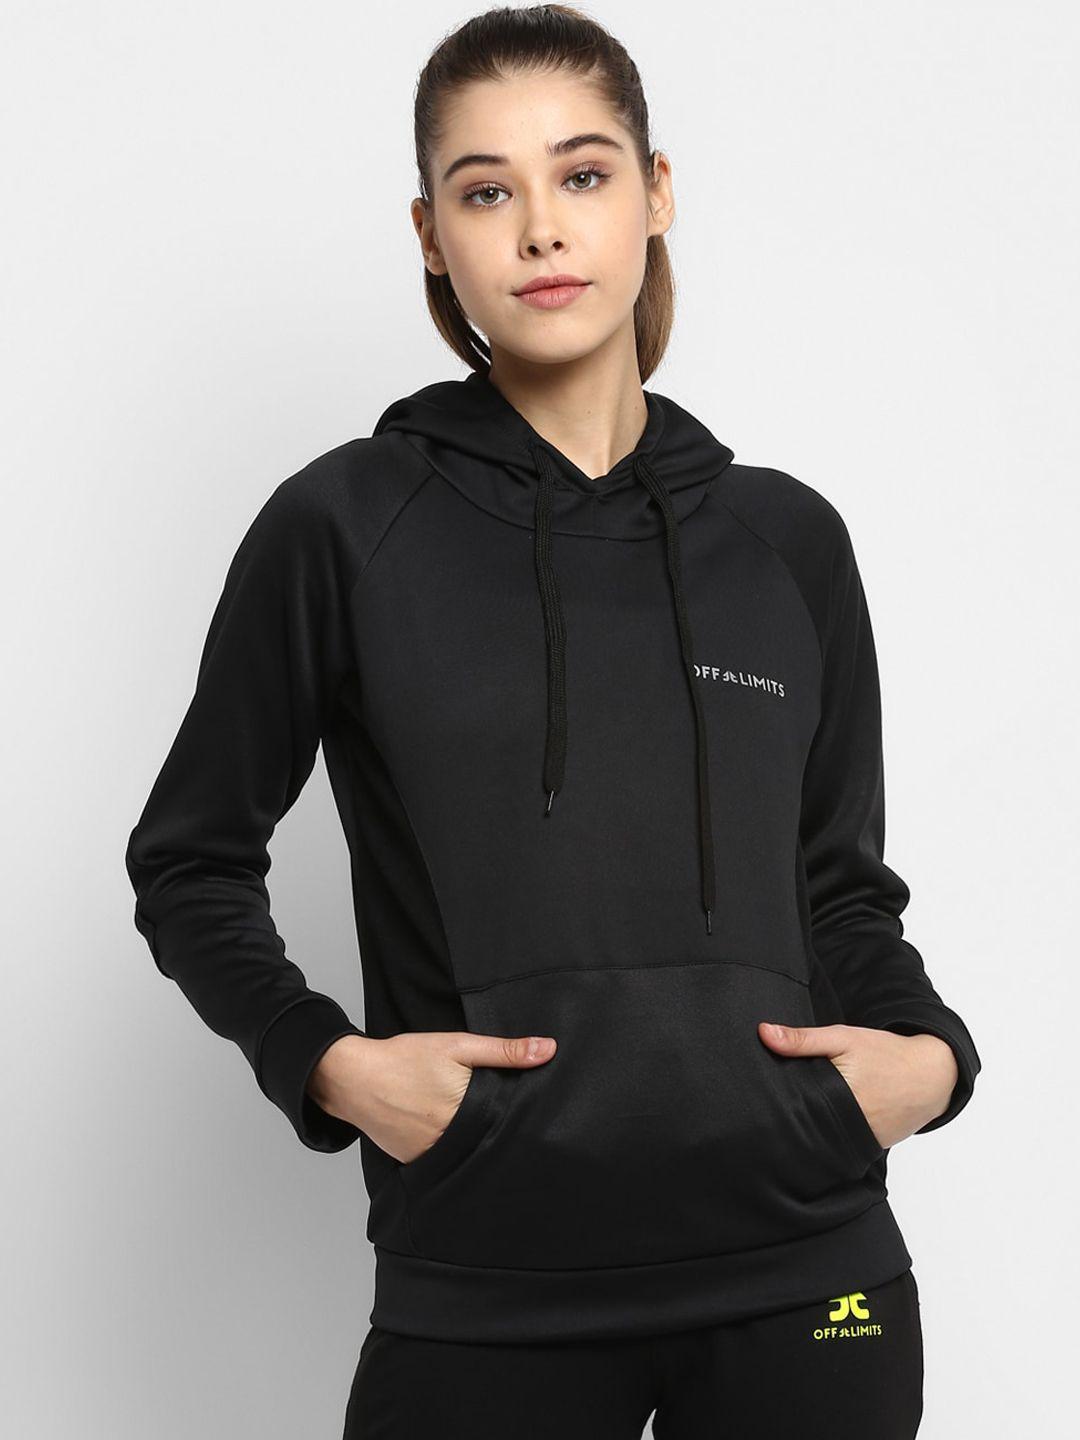 off-limits-women-black-solid-hooded-sweatshirt